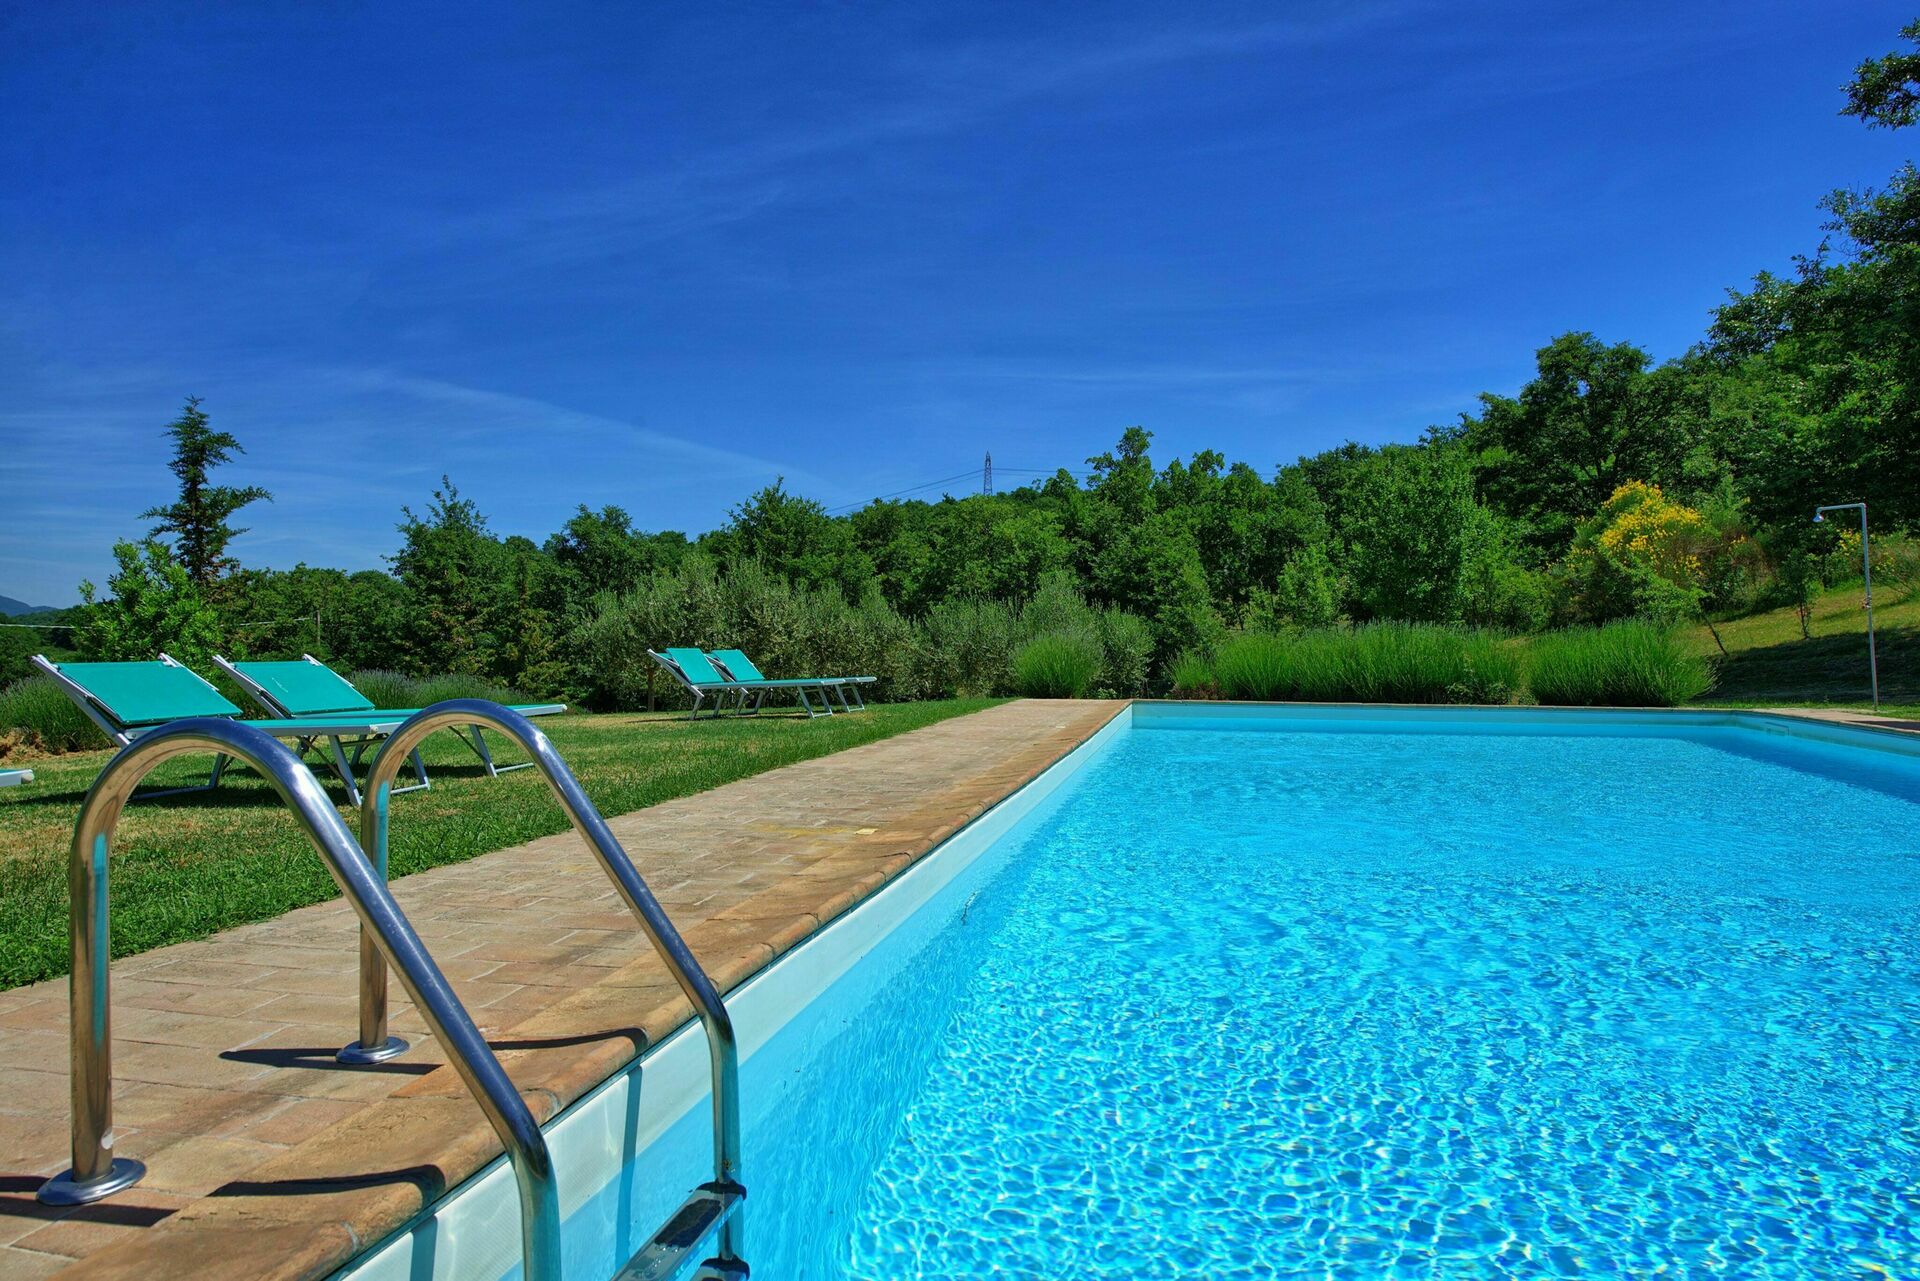 459_dc1eab0_Villa Stefano, 6 slaapkamers, prive zwembad, Toscane, Lazio, ruime tuin (15)